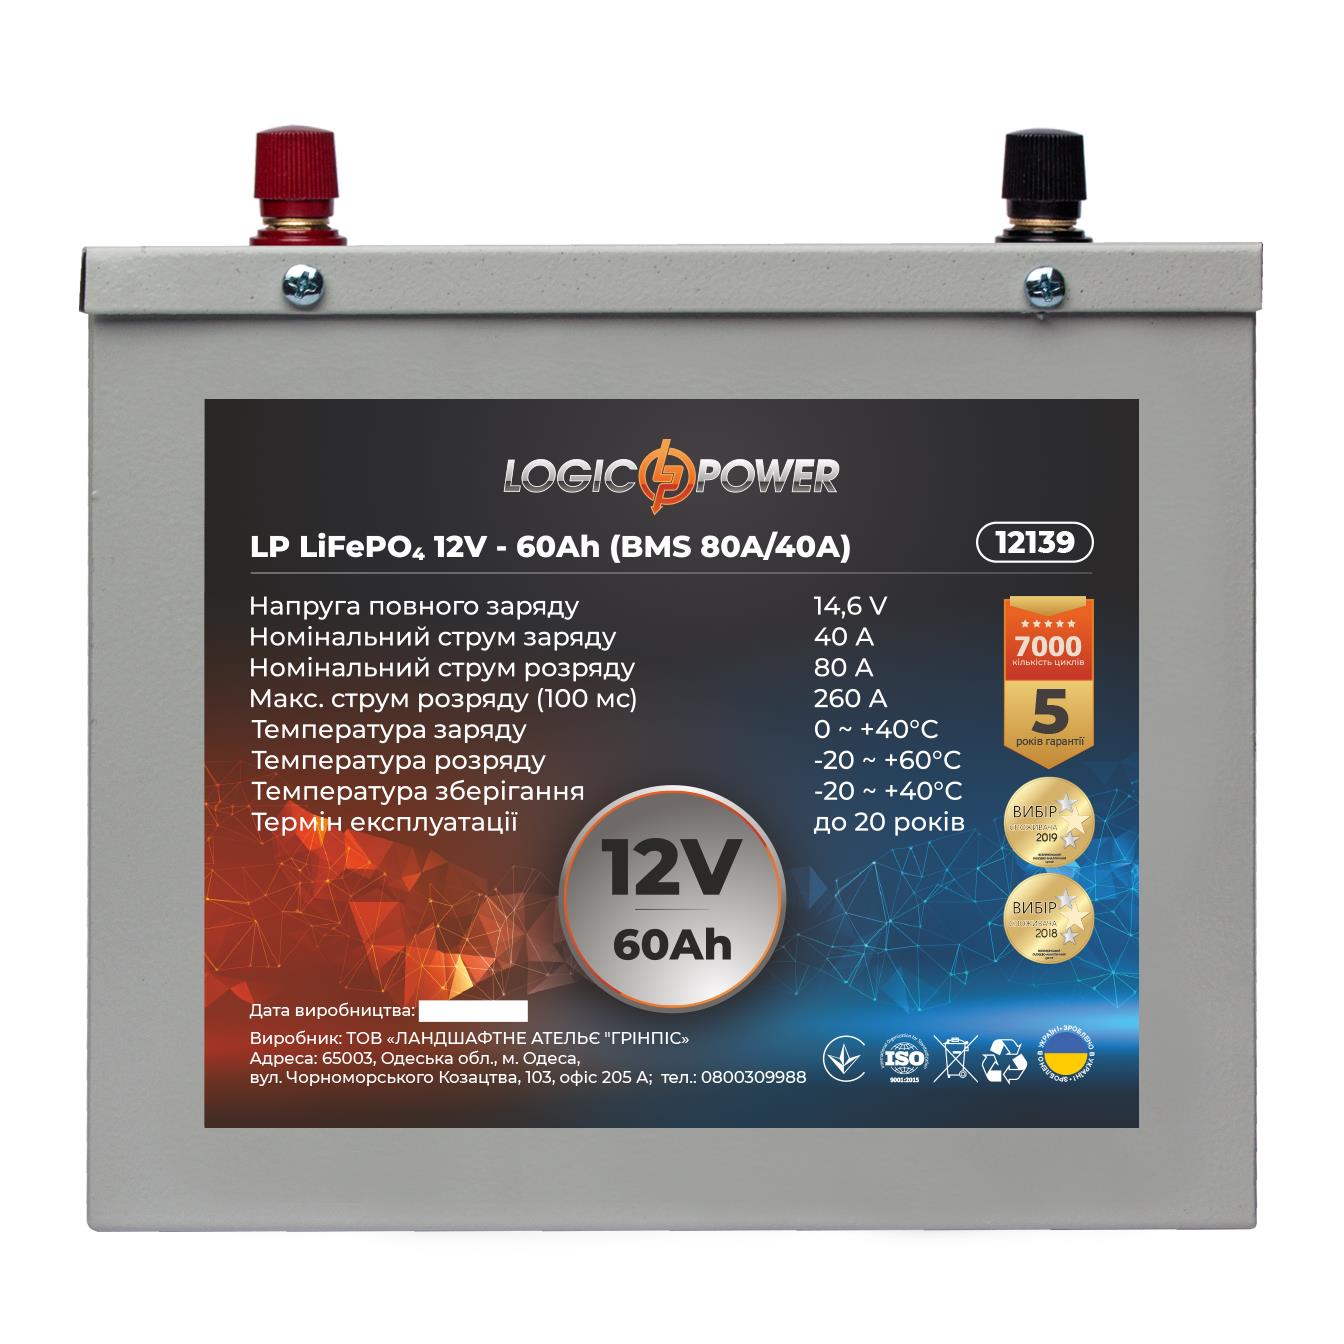 Аккумулятор литий-железо-фосфатный LogicPower LP LiFePO4 12V - 60 Ah (BMS 80A/40A) металл (12139)